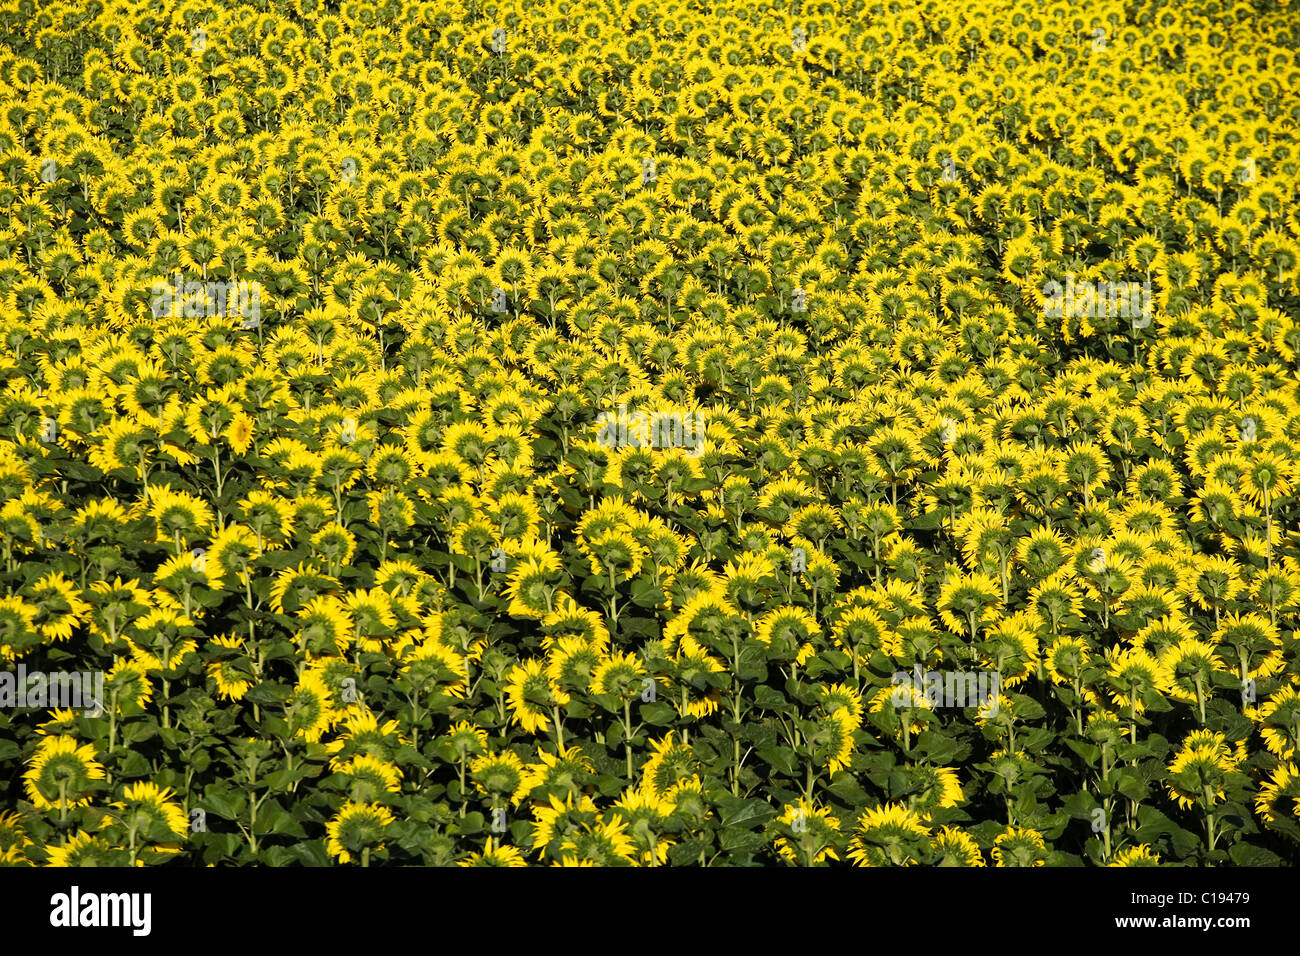 Field of sunflowers (Helianthus annuus) Stock Photo